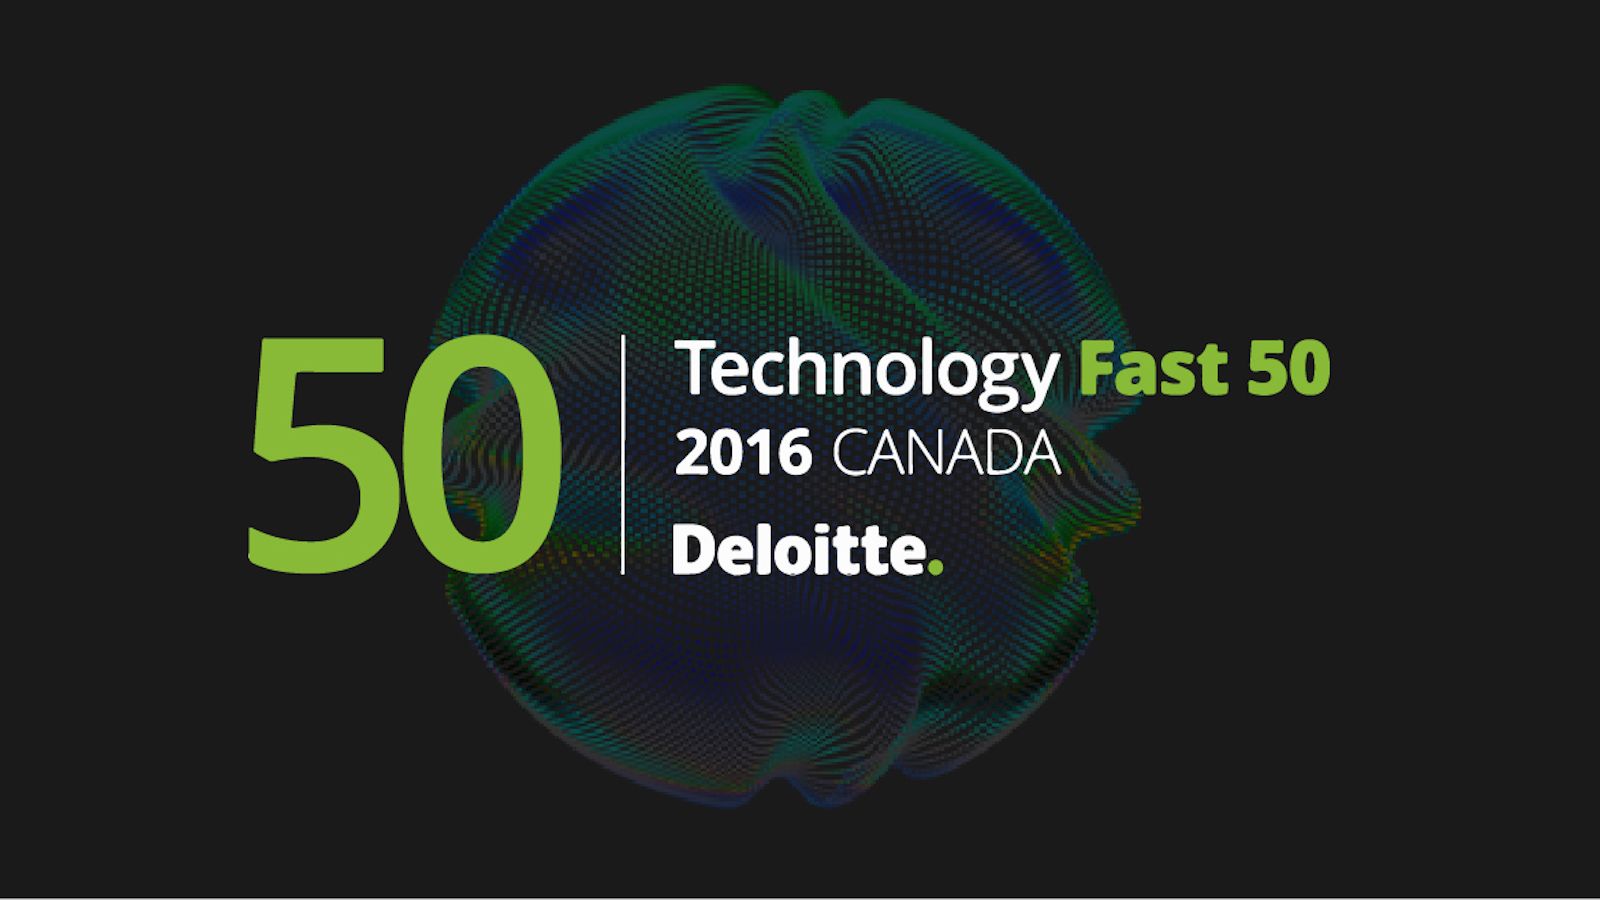 Deloitte Technology Fast 50- mobileLIVE